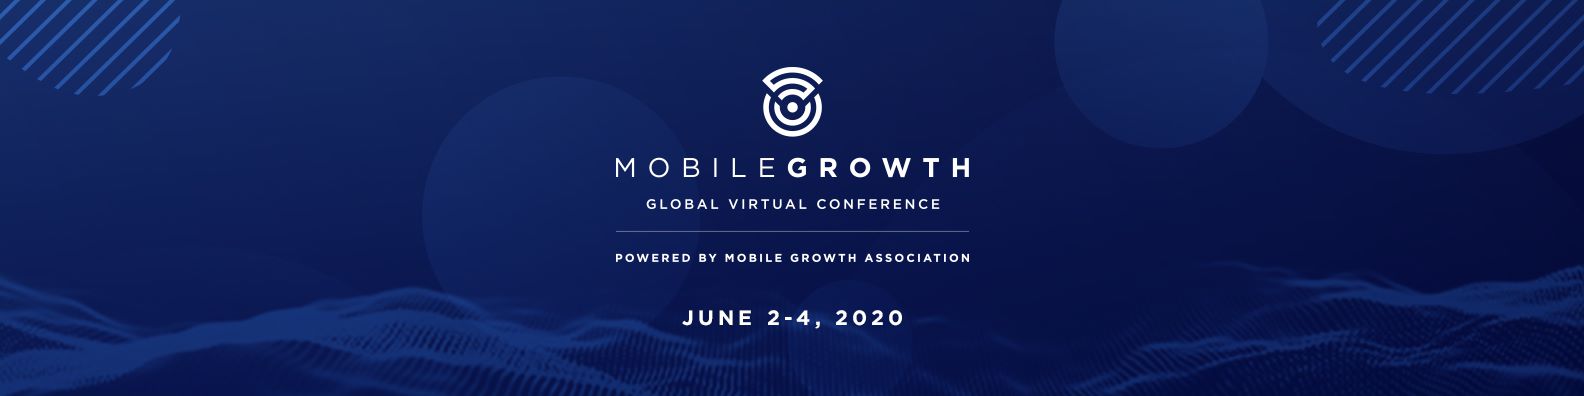 MGS Global virtual conference